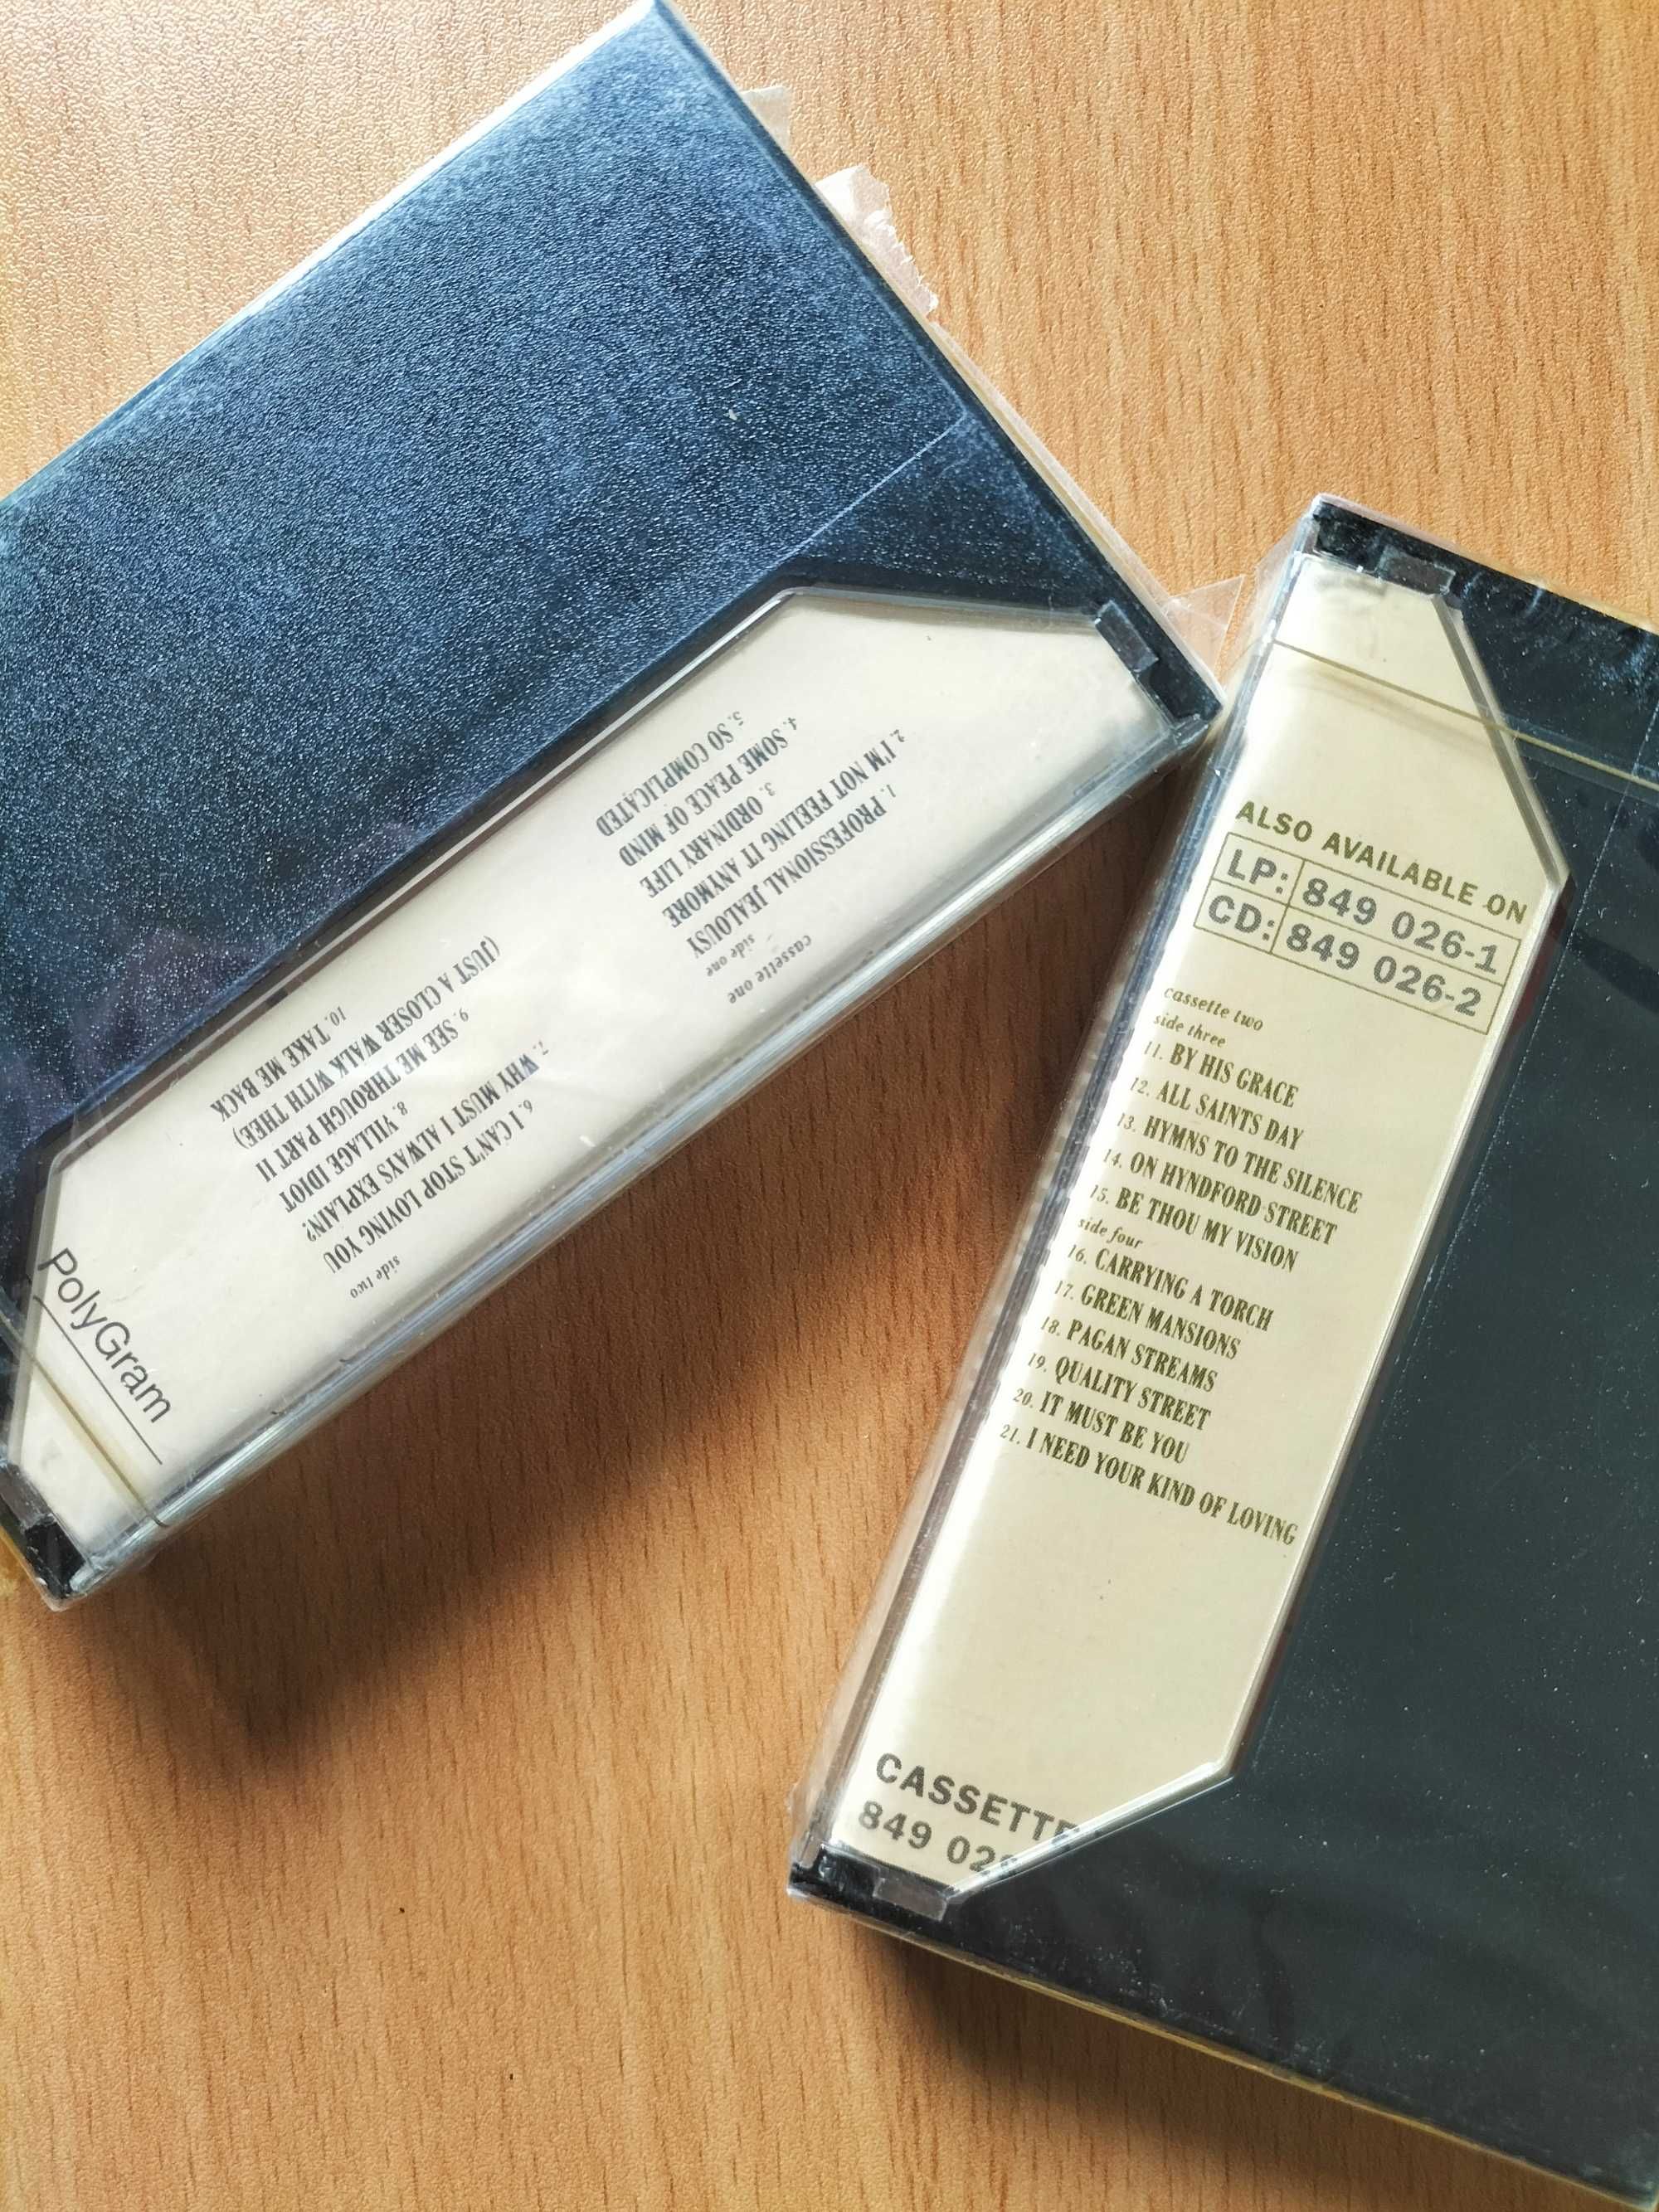 Cassetes Van Morrison "seladas"